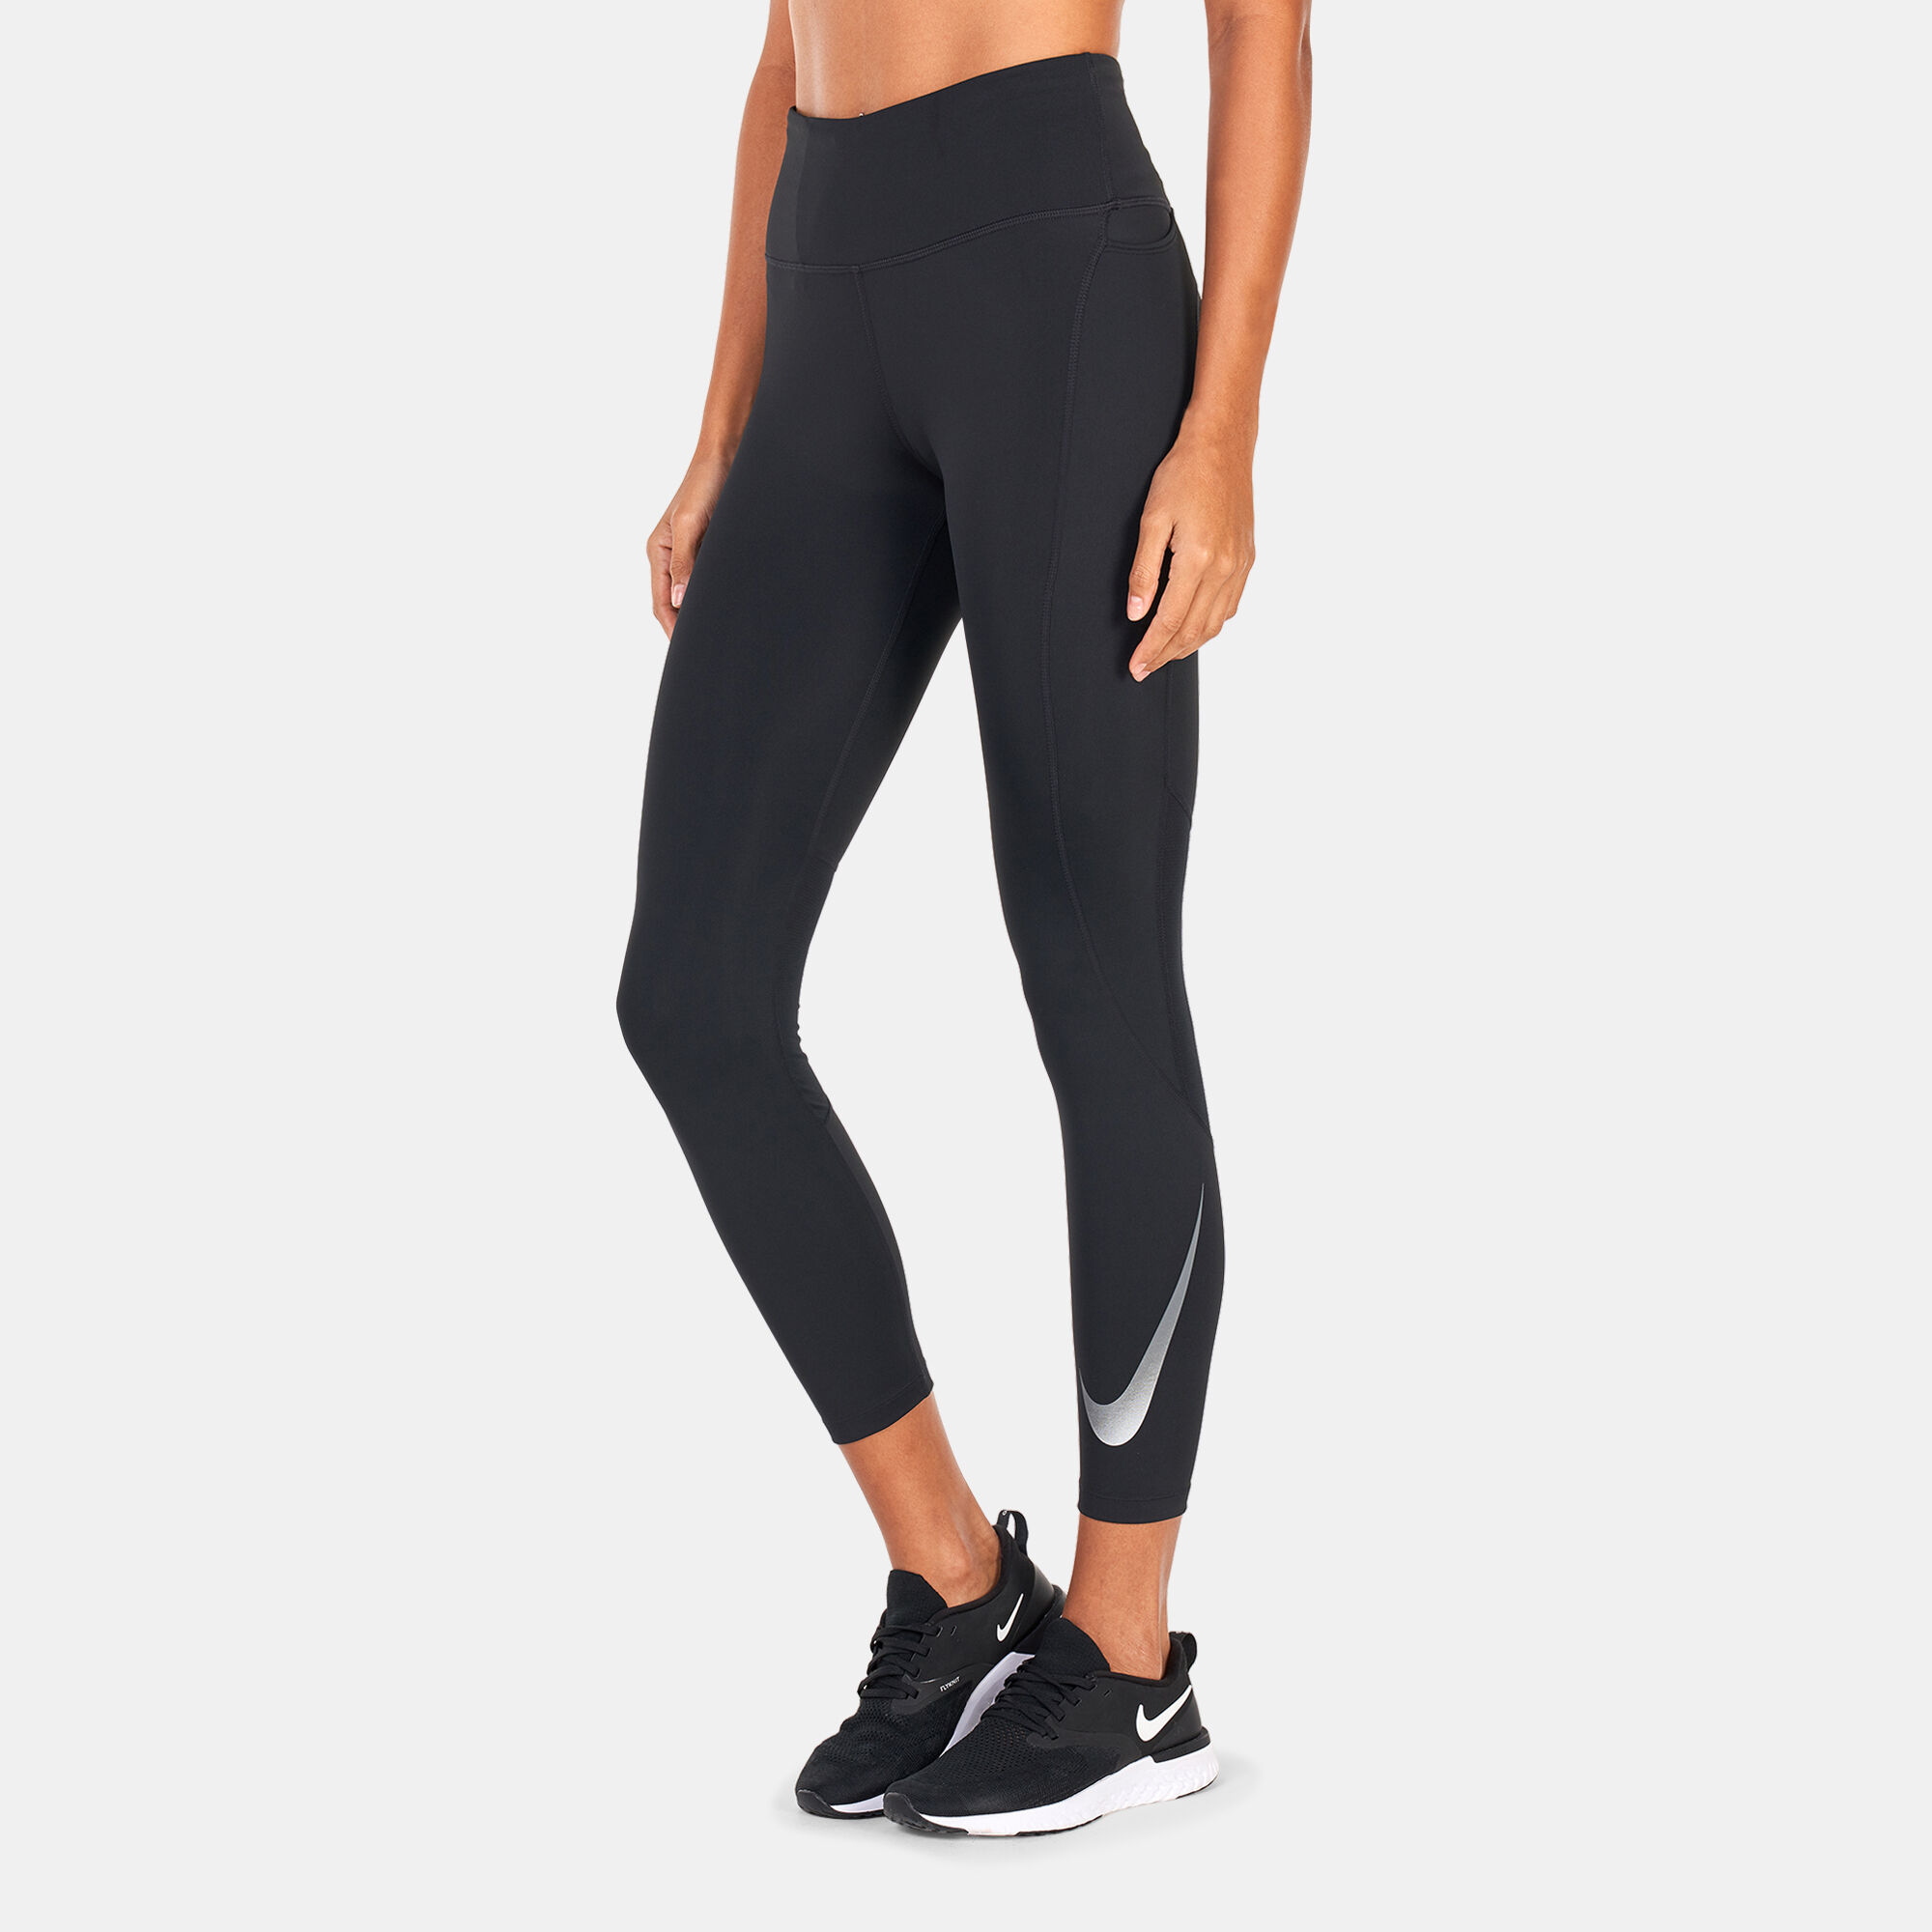 Buy Nike Women's Slim Leggings (939447-010_Black/White_XS) at Amazon.in